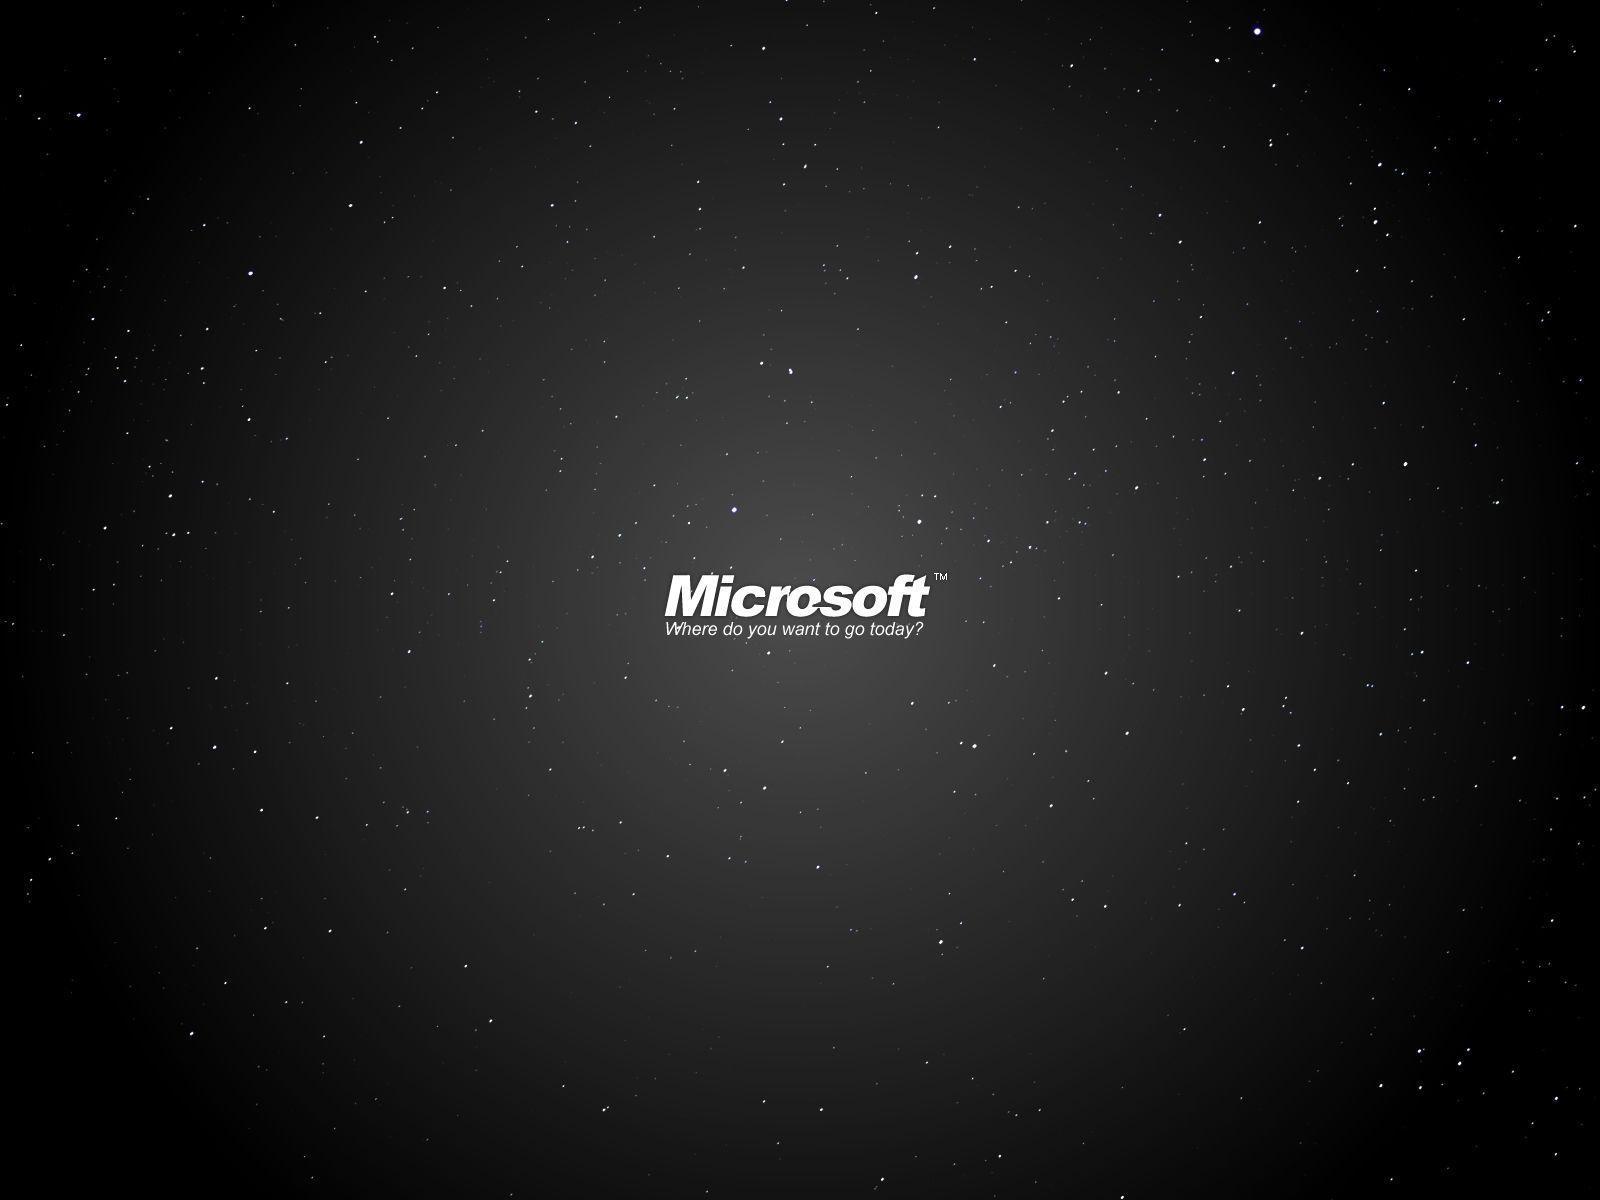 Microsoft Wallpaper. HD Wallpaper Early